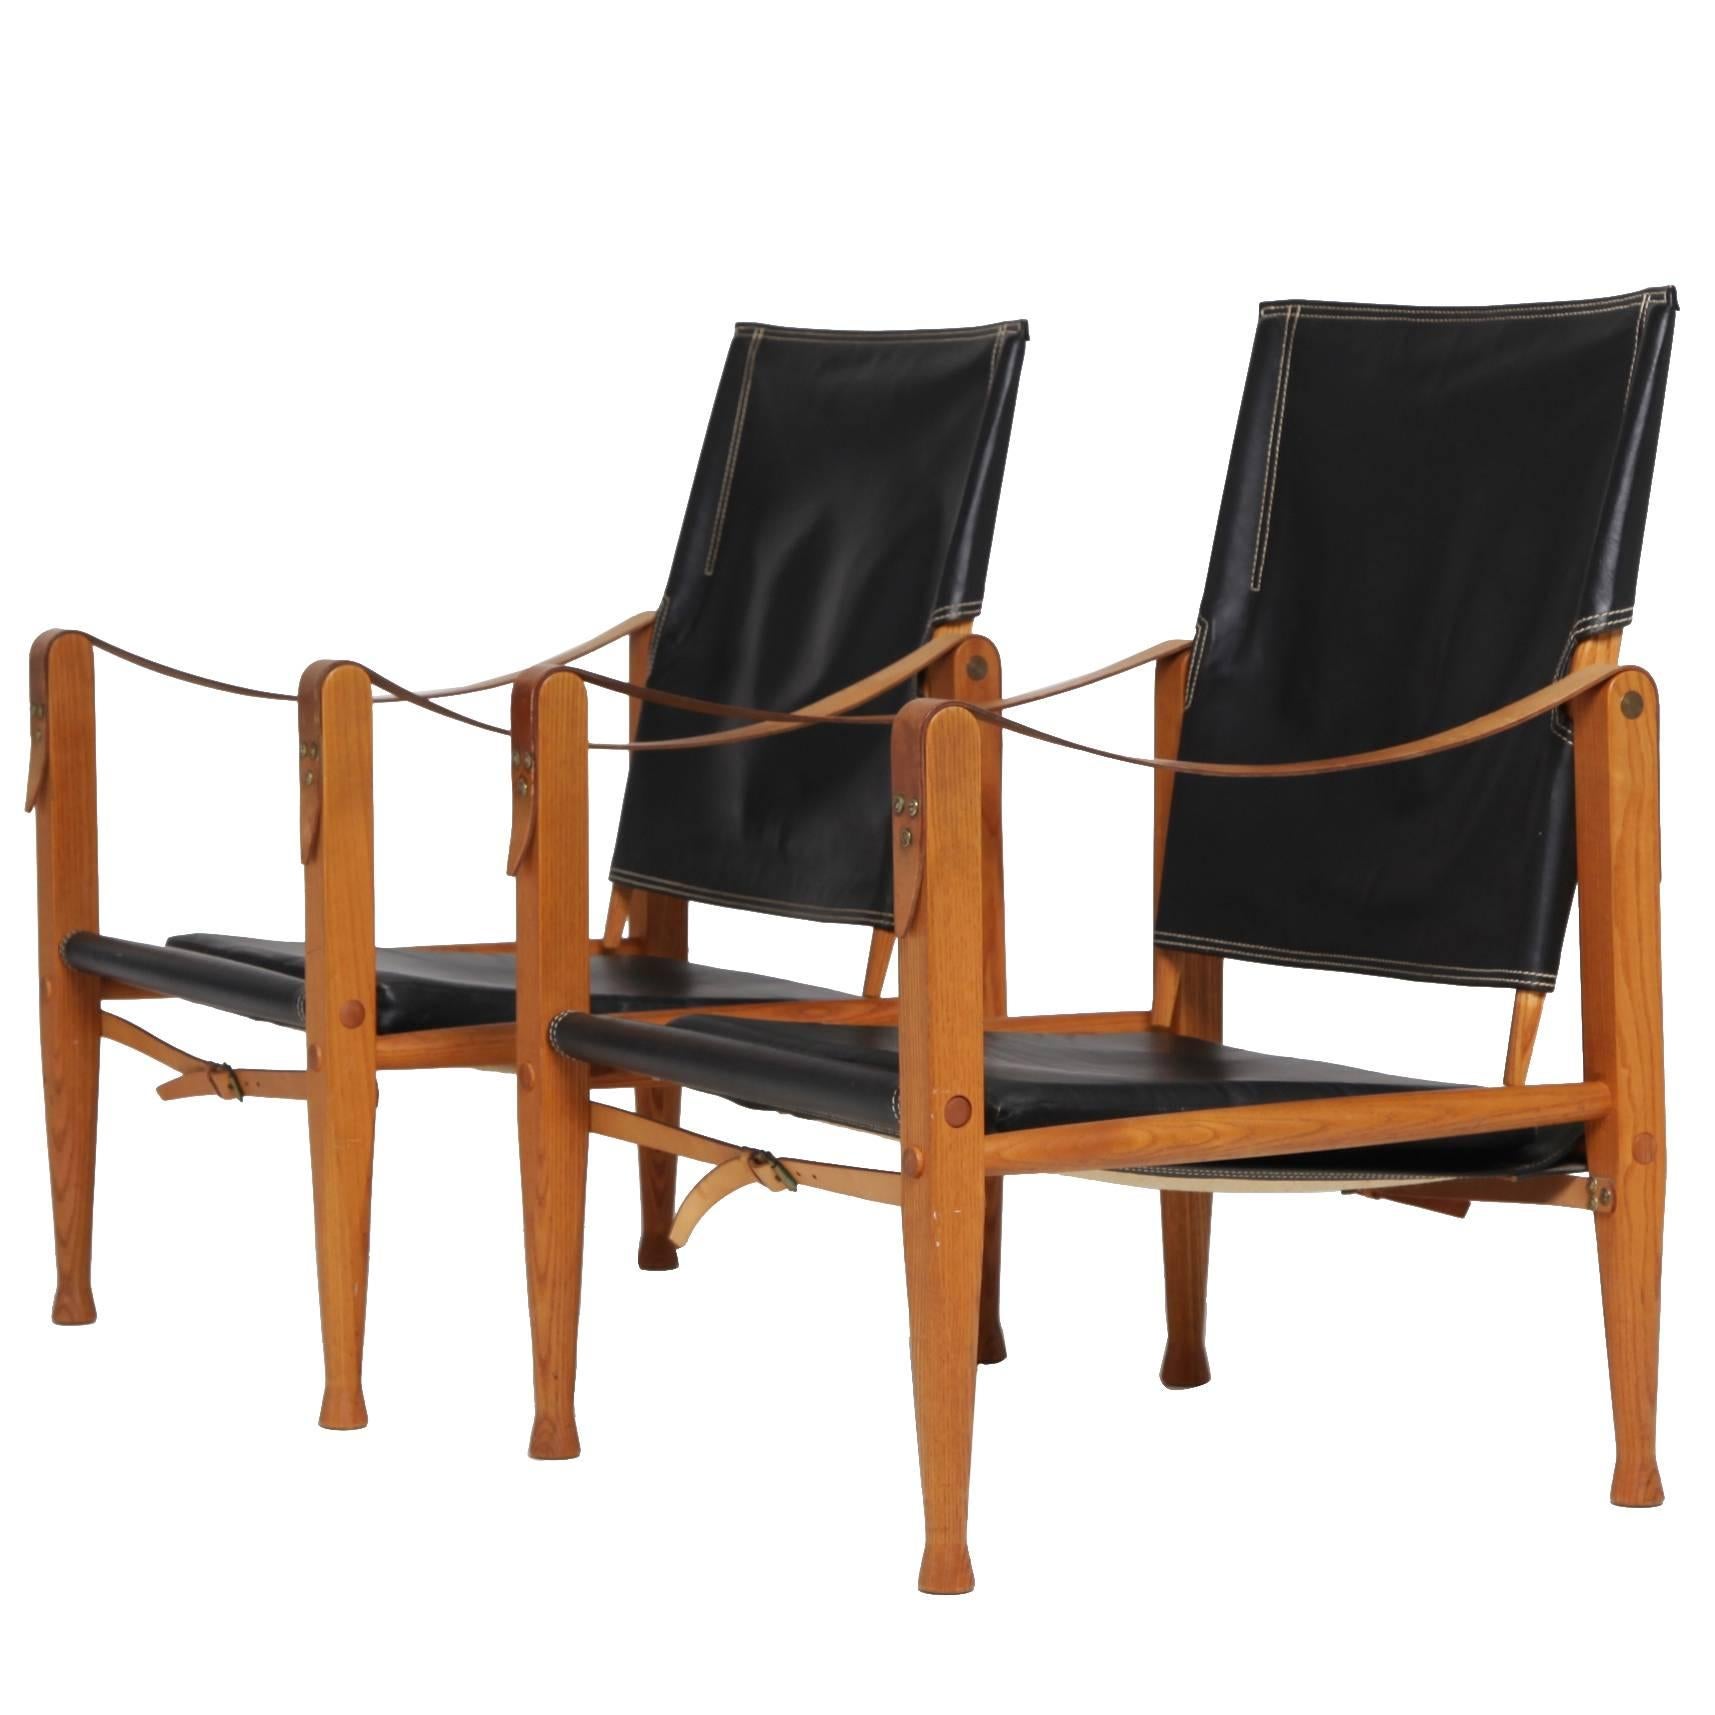 Pair of Kaare Klint Safari Chairs, Made by Rud Rasmussen, Denmark